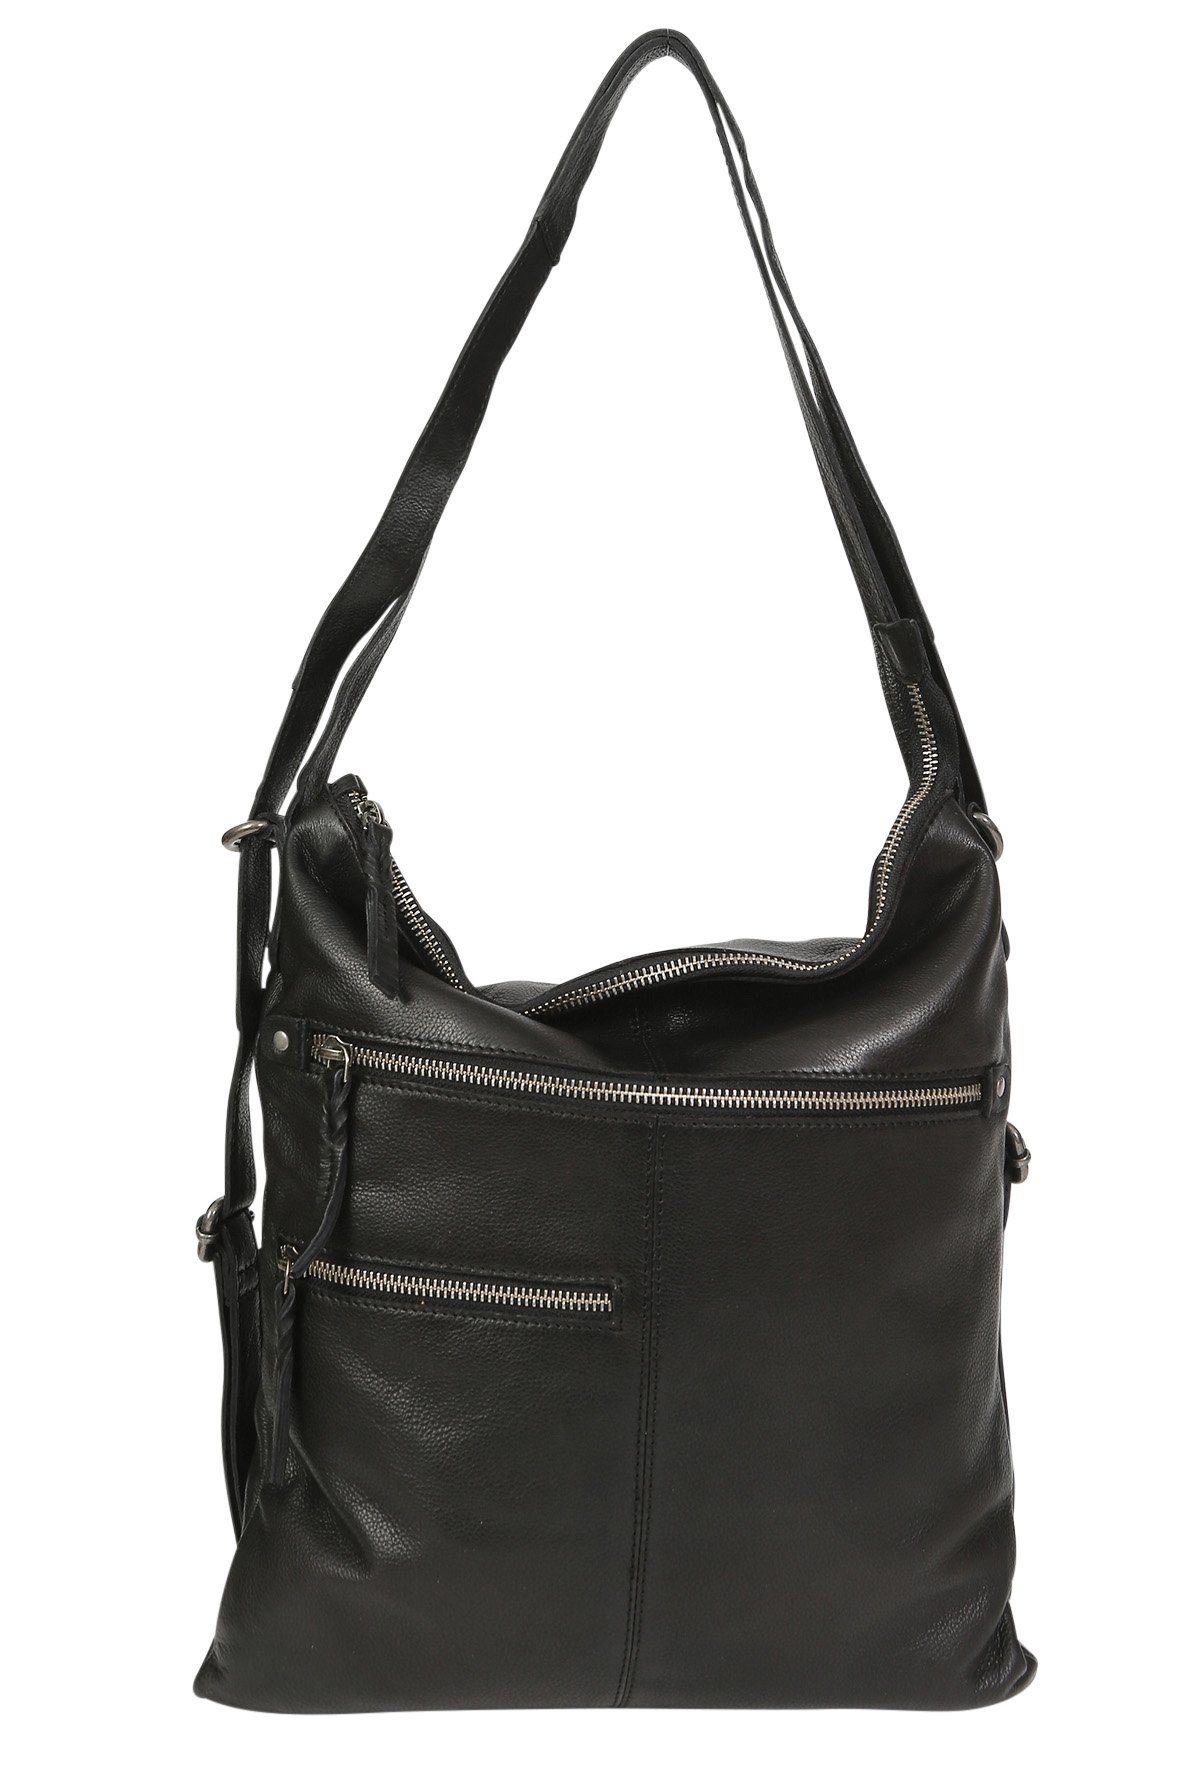 Hobo Backpack | Hobo Bag | Leather Backpack | Afterpay